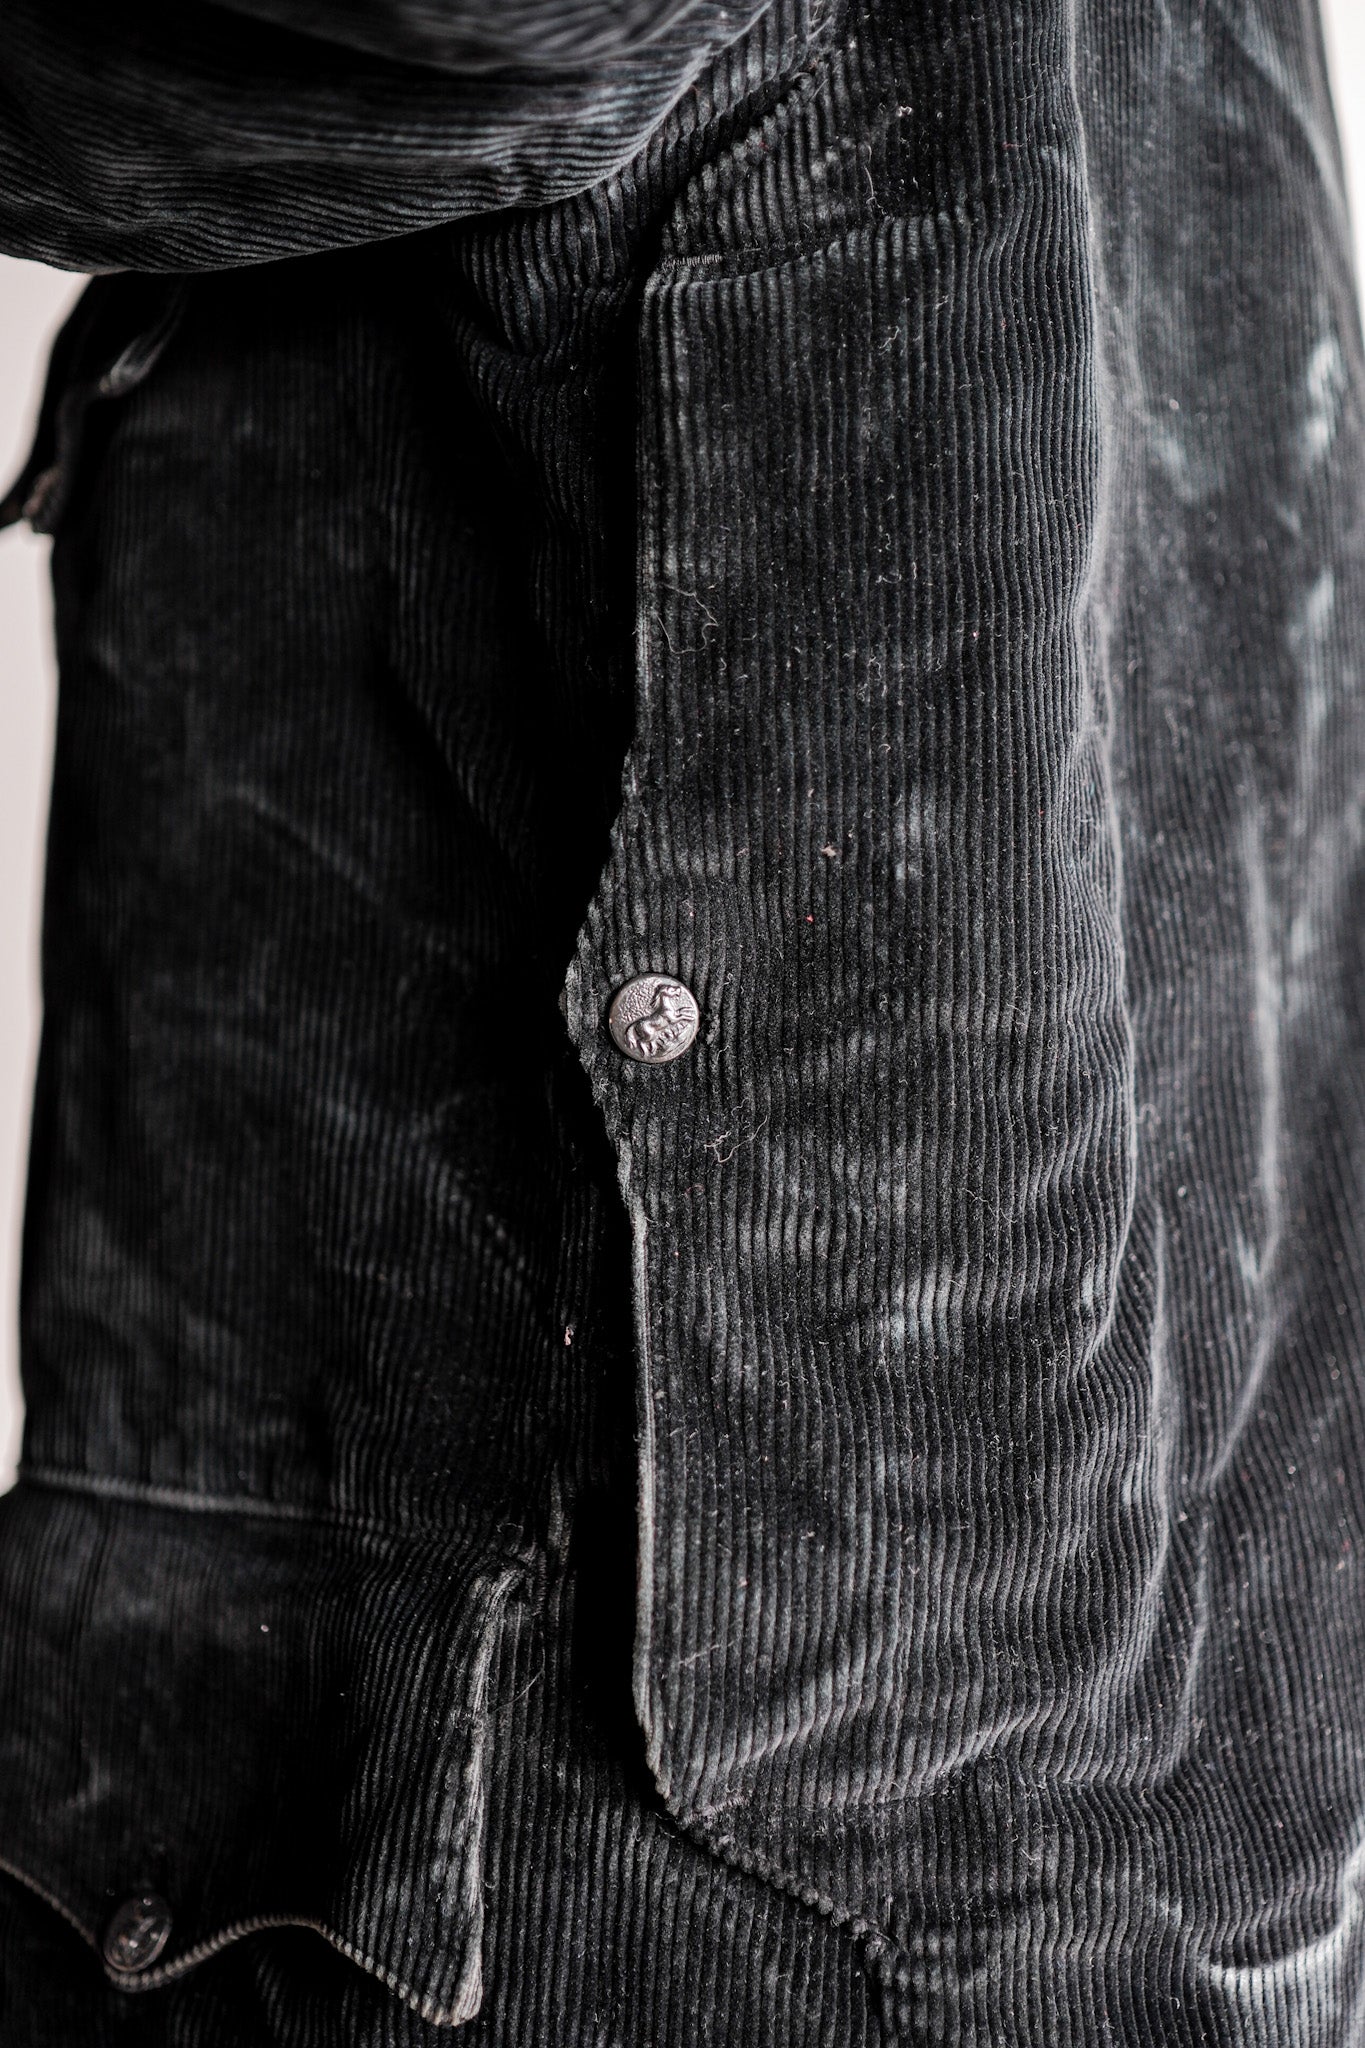 [~ 40's] French Vintage Black Corduroy Hunting Jacket